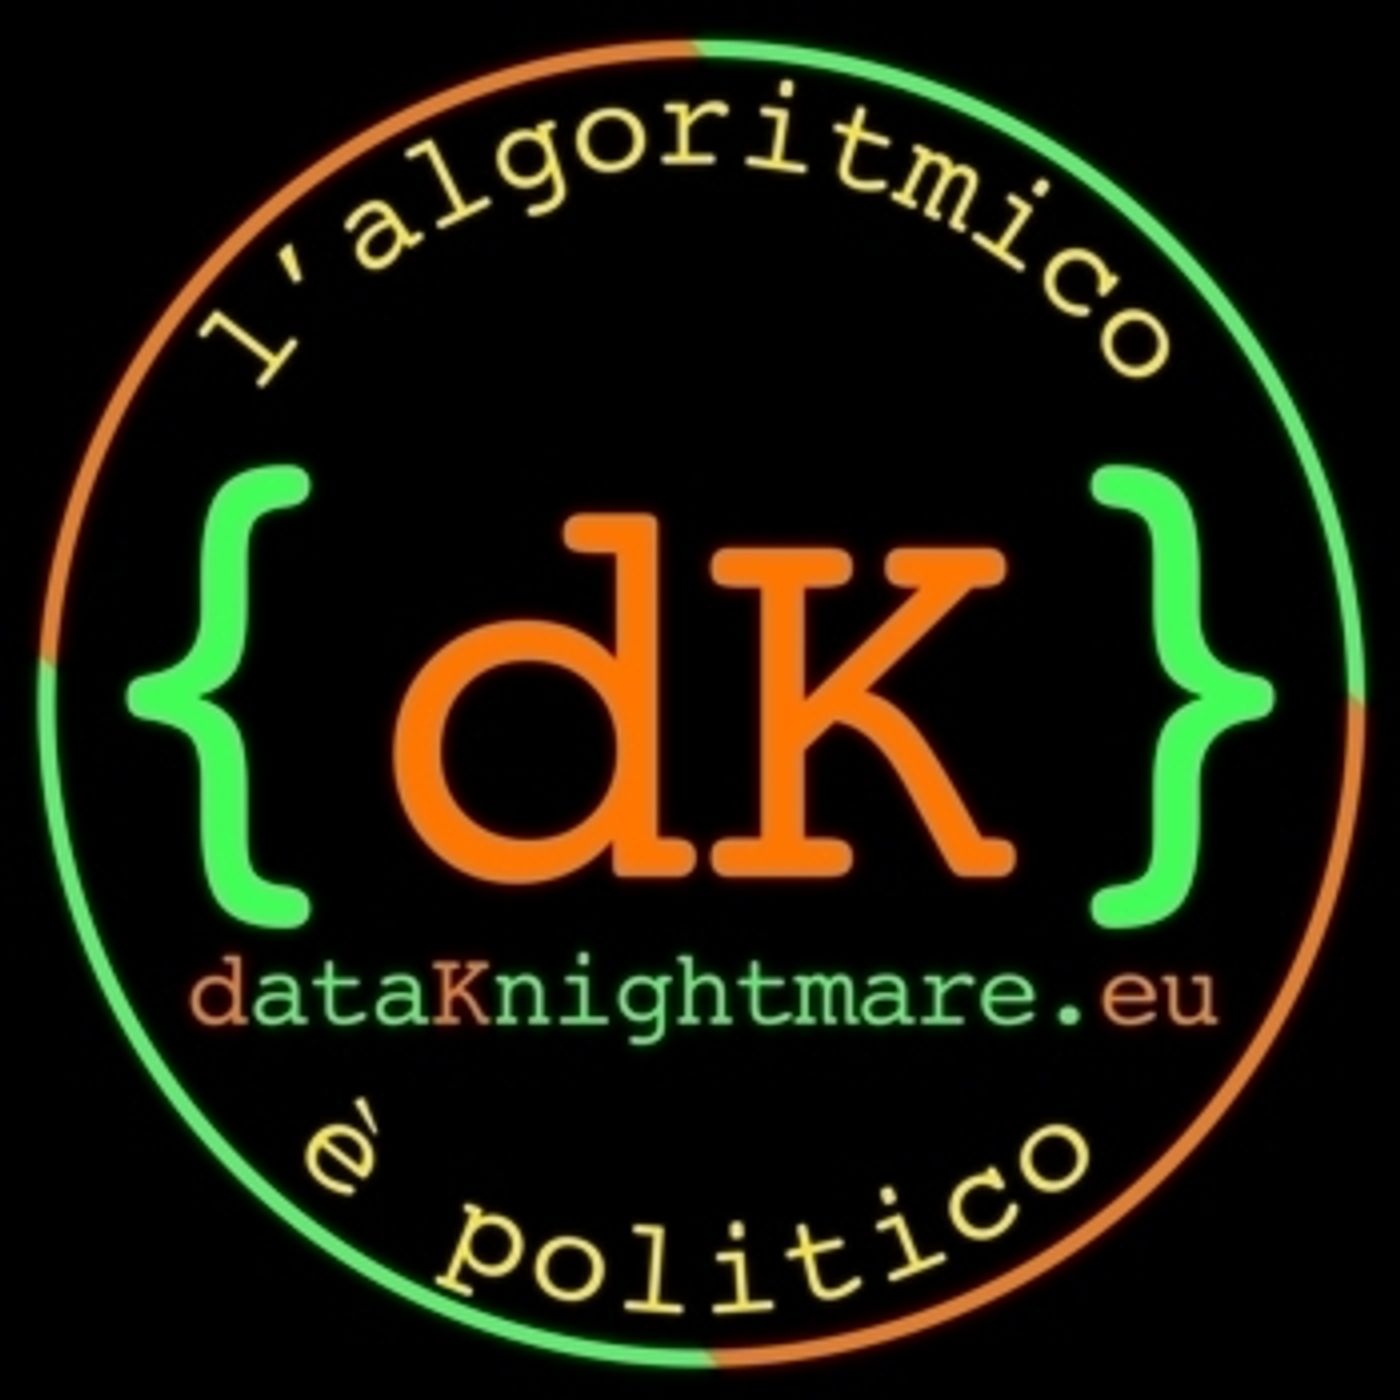 DK 3x27.2 - Non moriremo di copyright p. 2